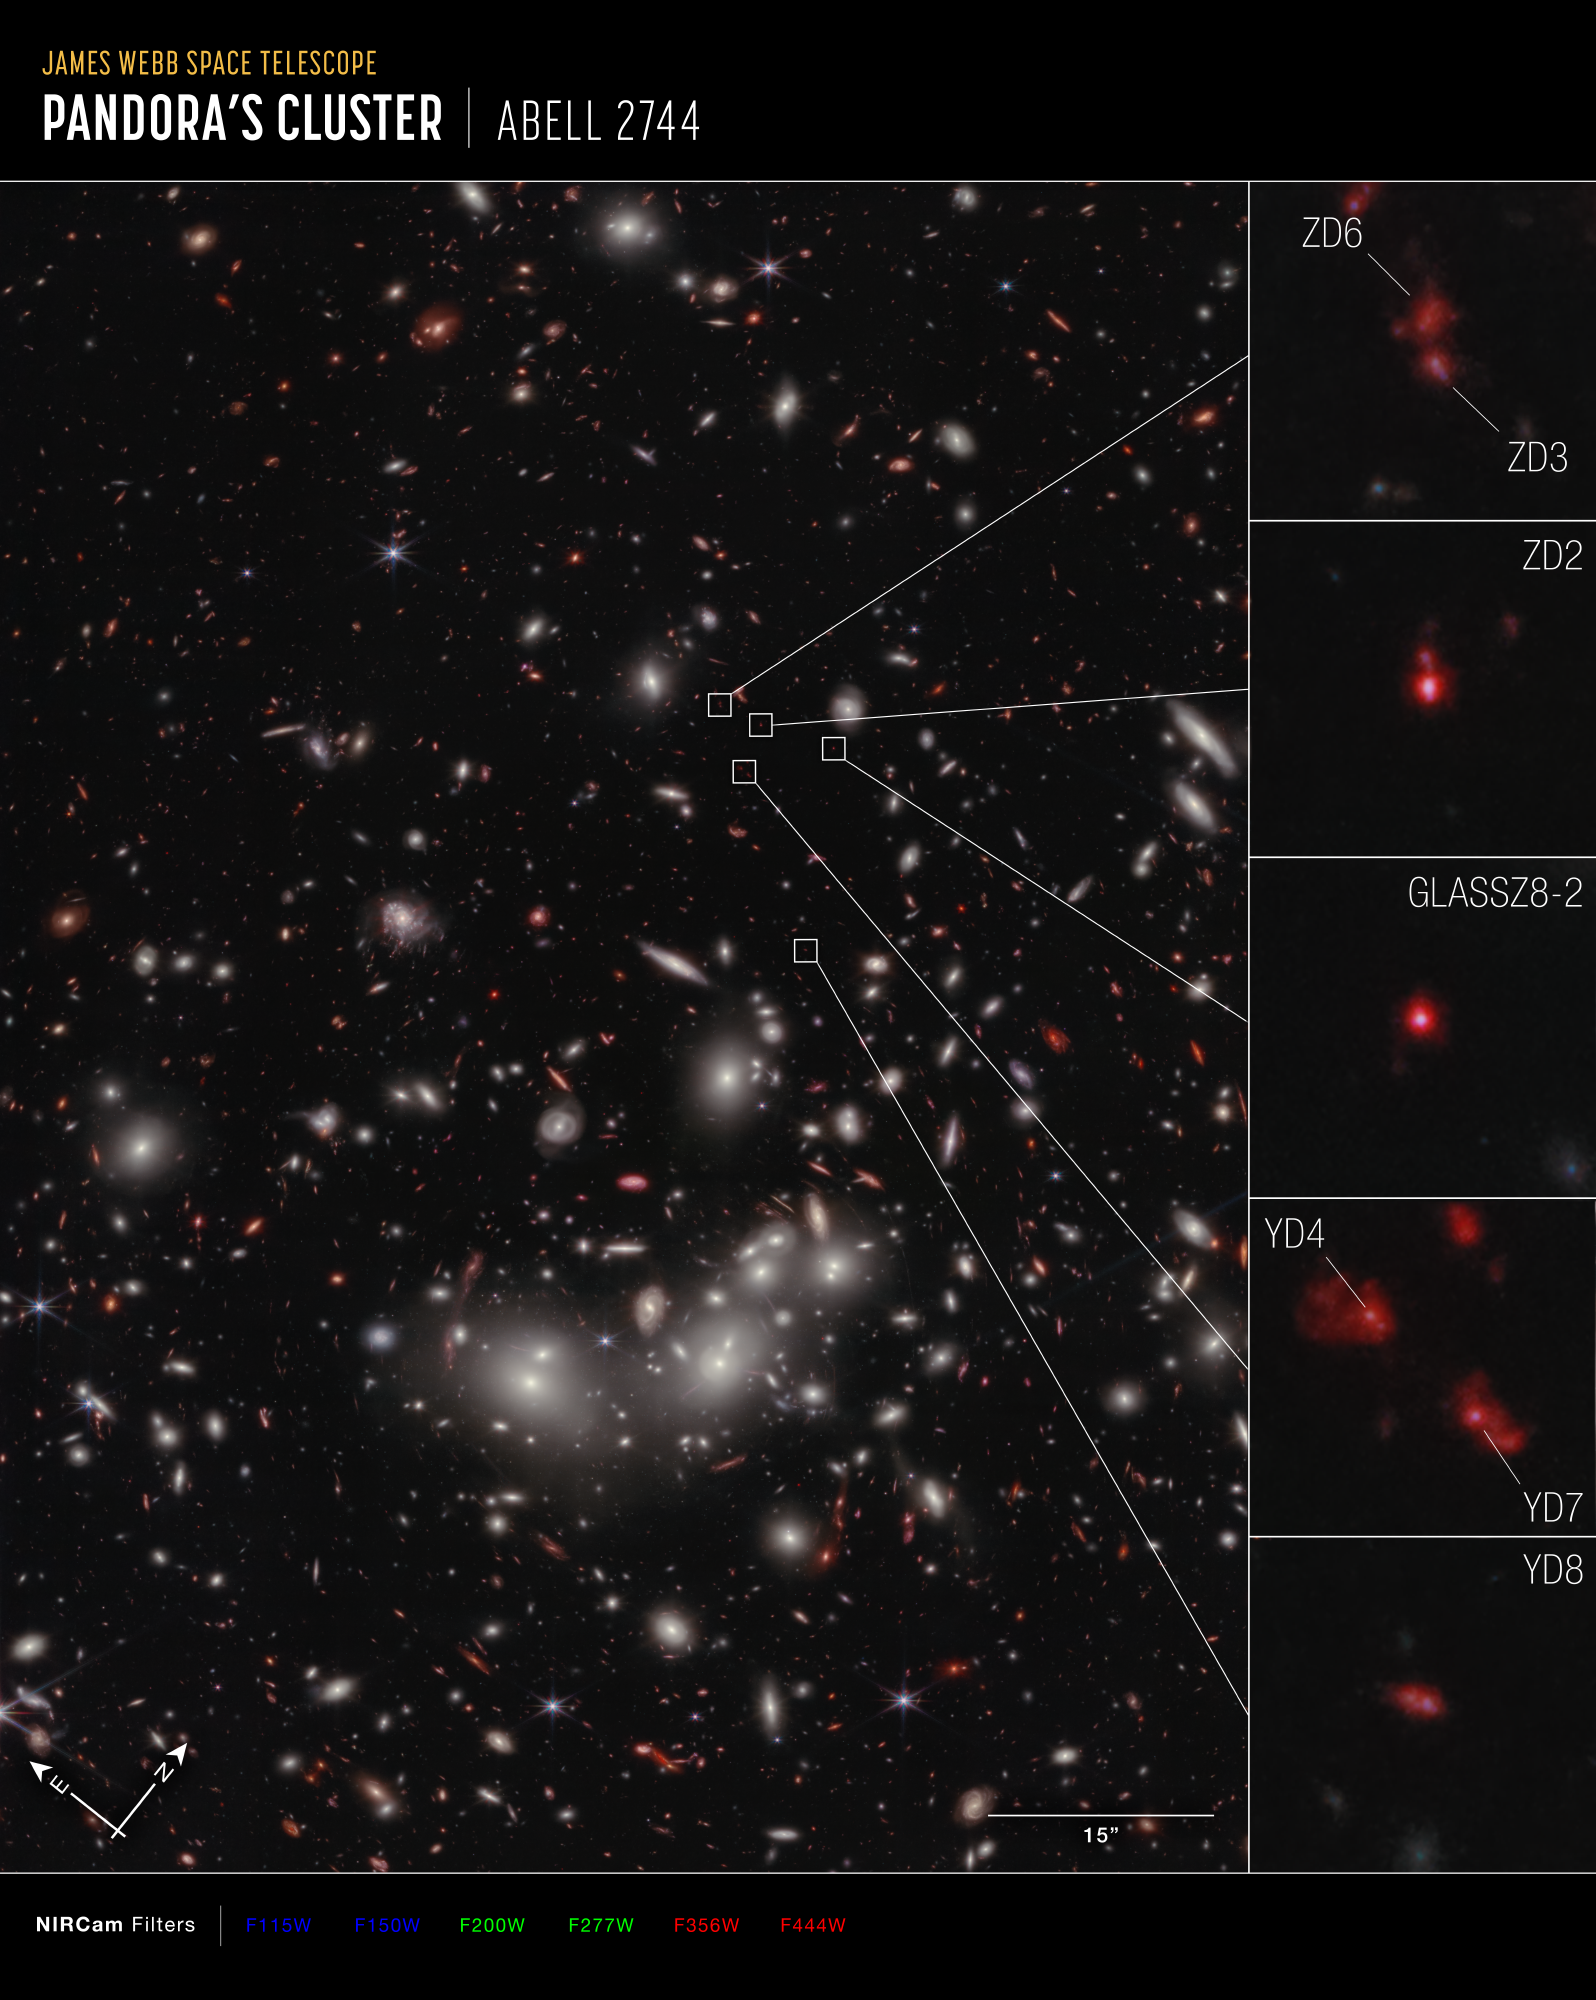 New James Webb Space Telescope images 2023 Pandora's Cluster image